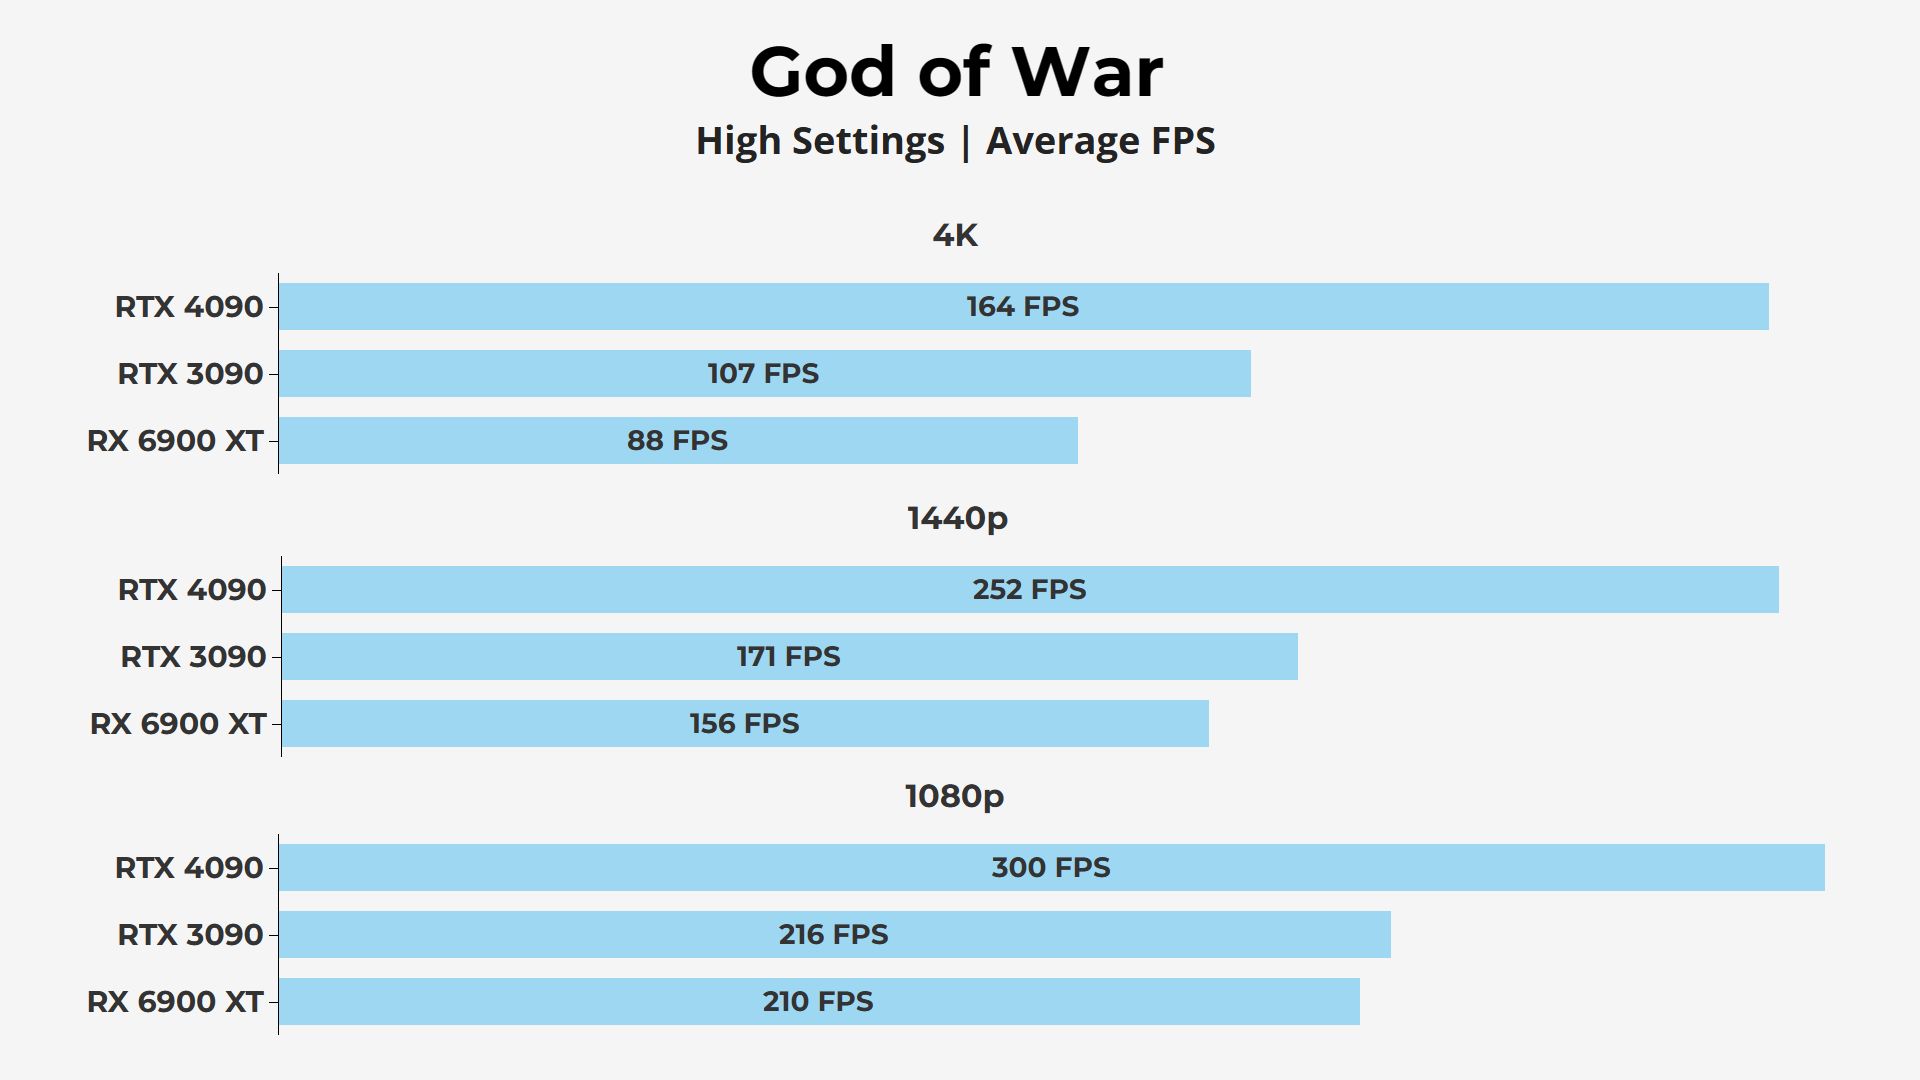 God of War RTX 4090